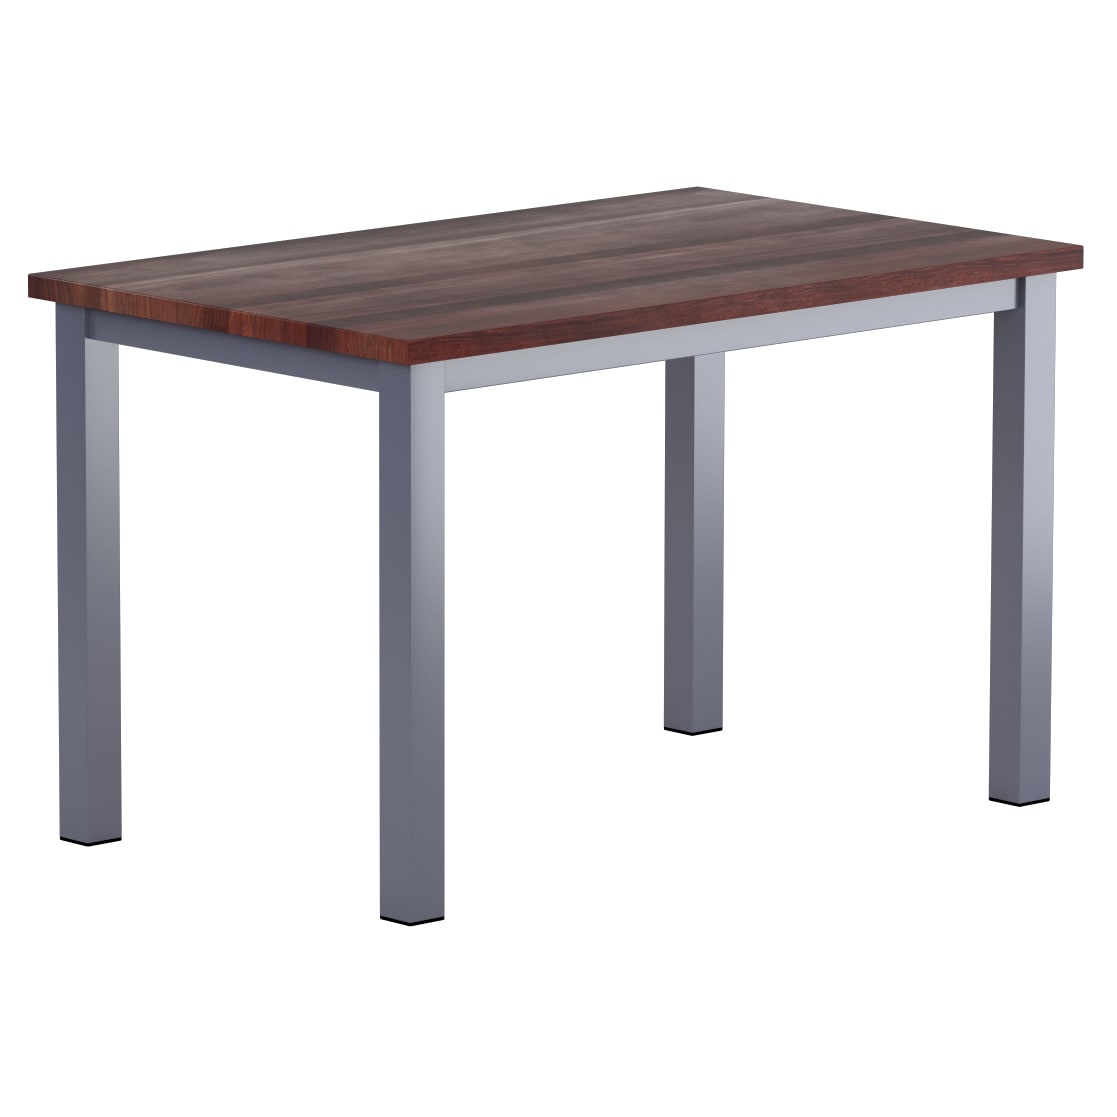 Ottis Table Set in Dark Grey Finish with Ottis Table Set in Dark Grey Finish